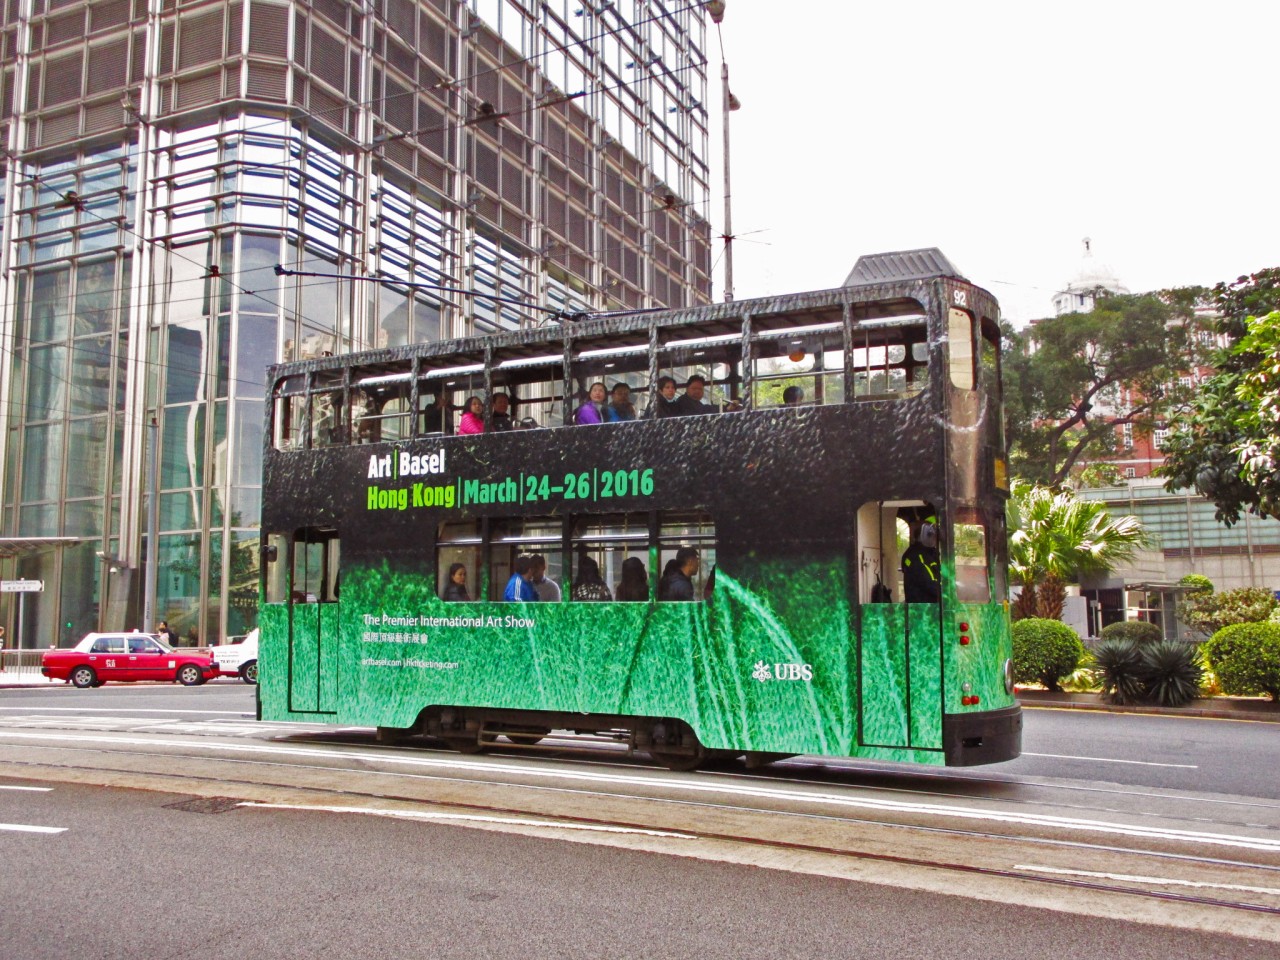 Bus in Hong Kong advertising the fair<br>Image: Courtesy Art Basel